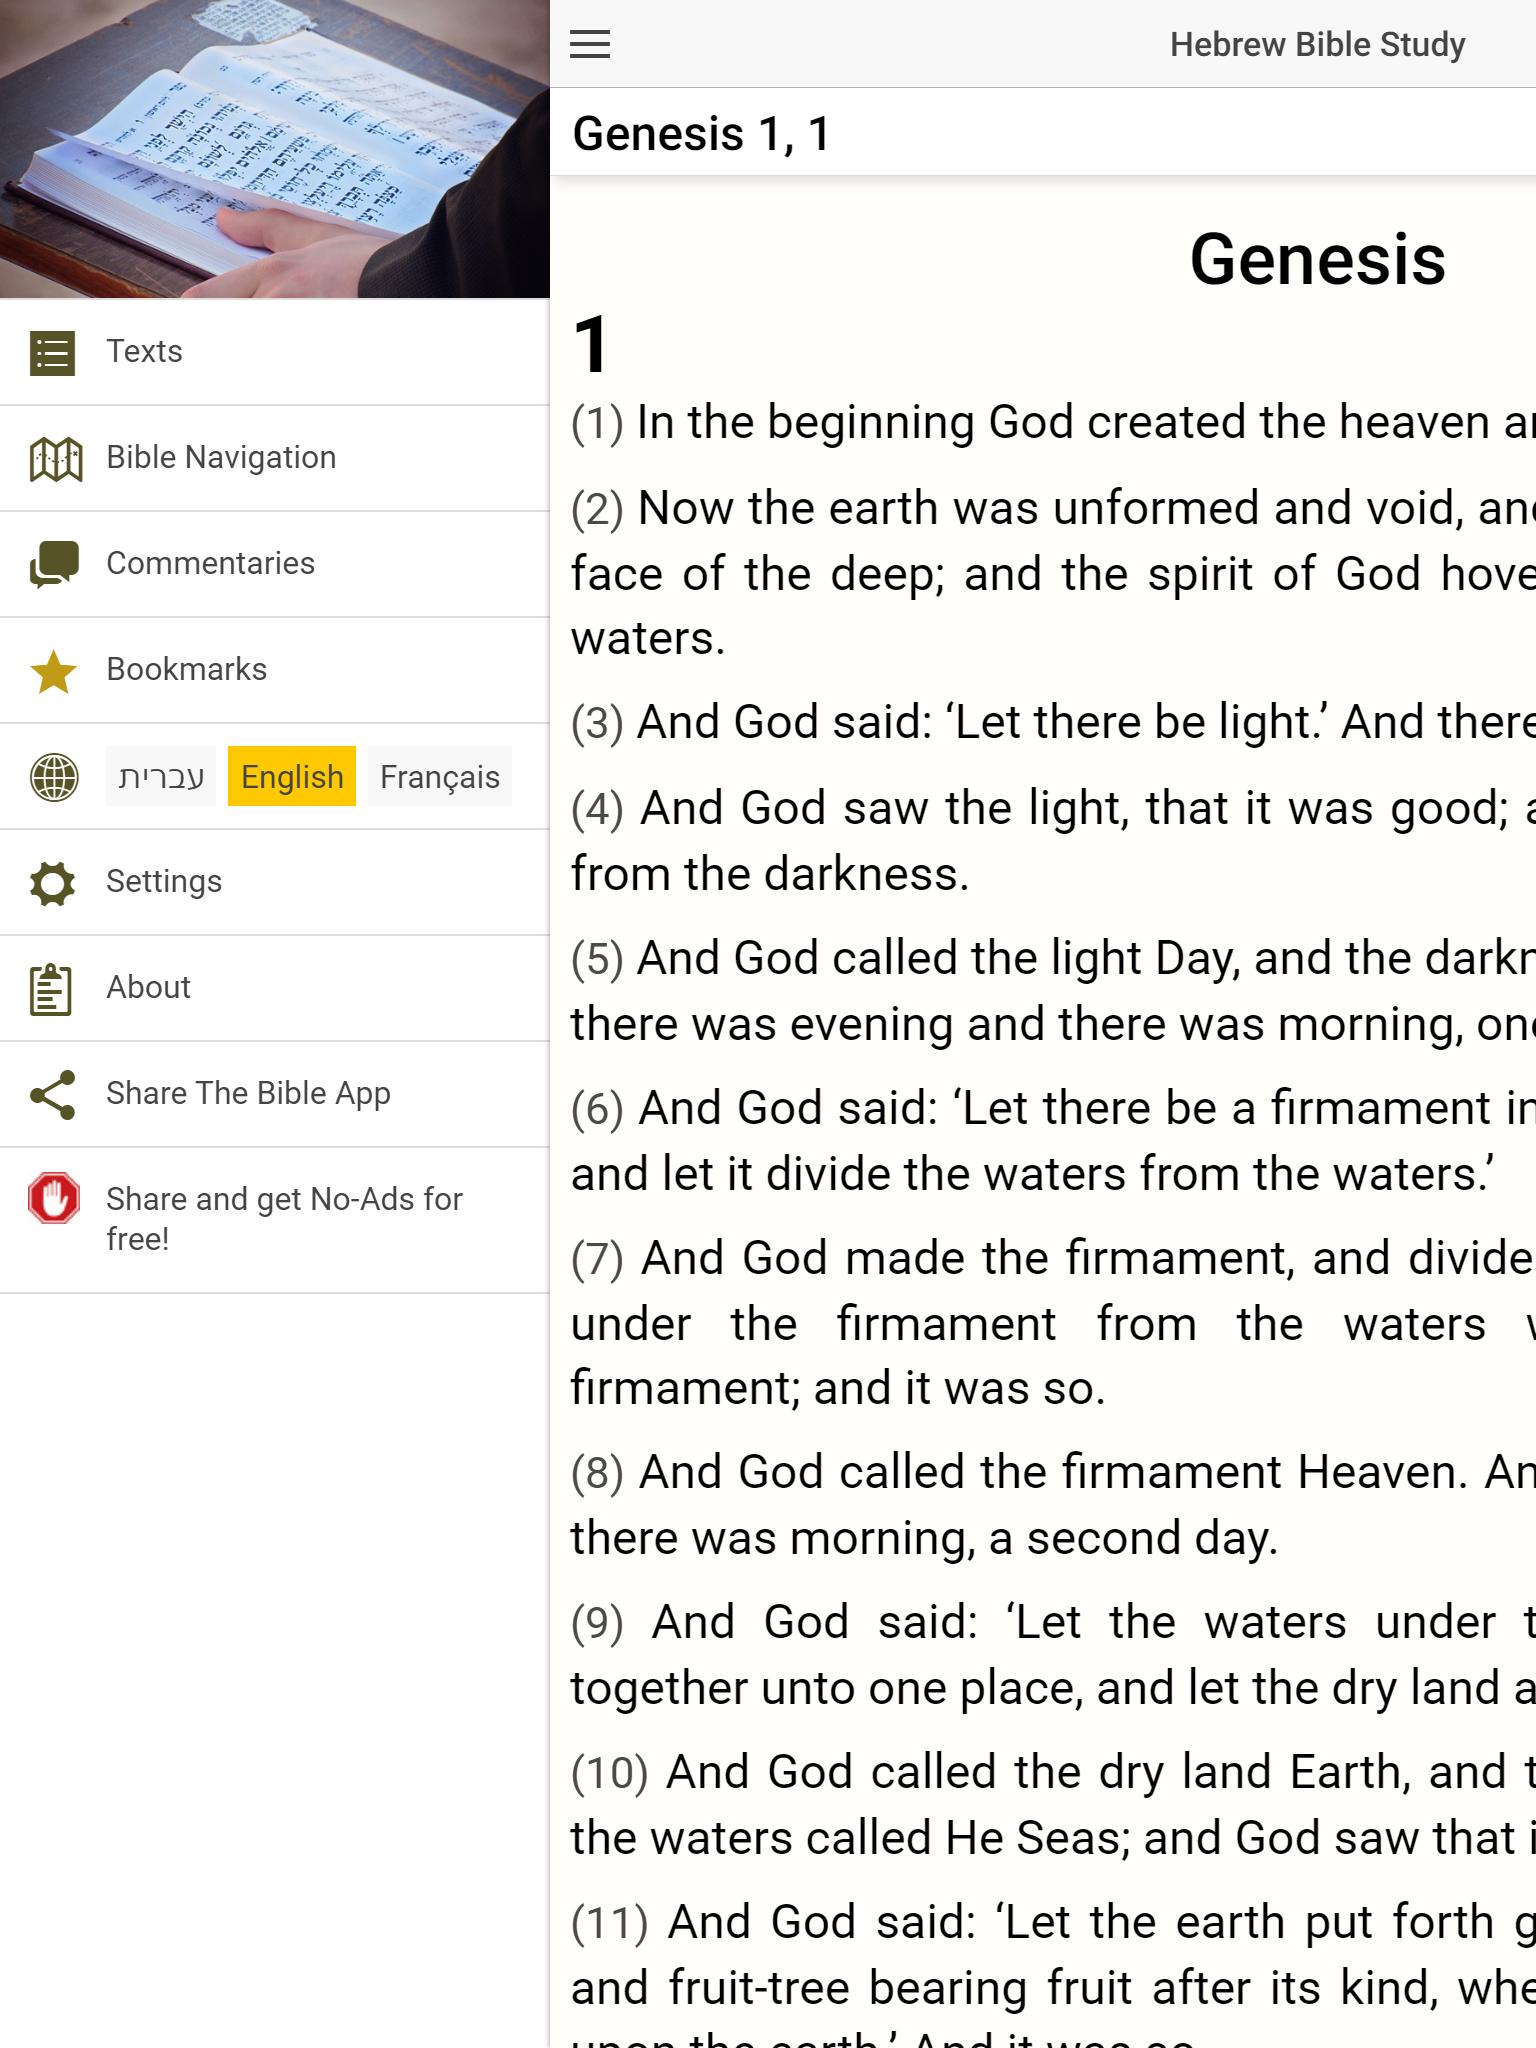 Hebrew Bible Study Commentary & Translation 30.0.29 Screenshot 12